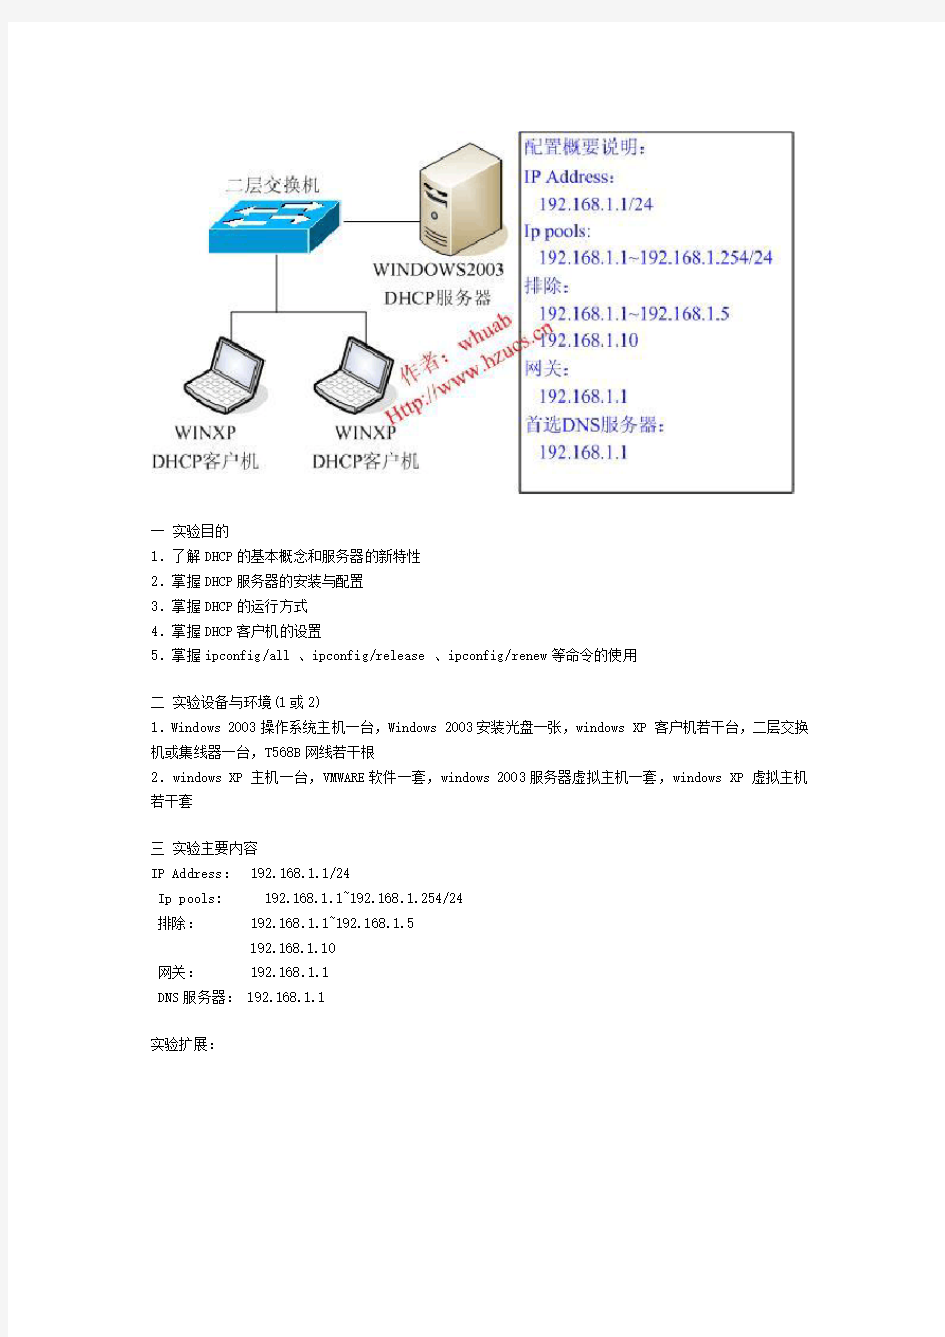 DHCP服务器配置实验